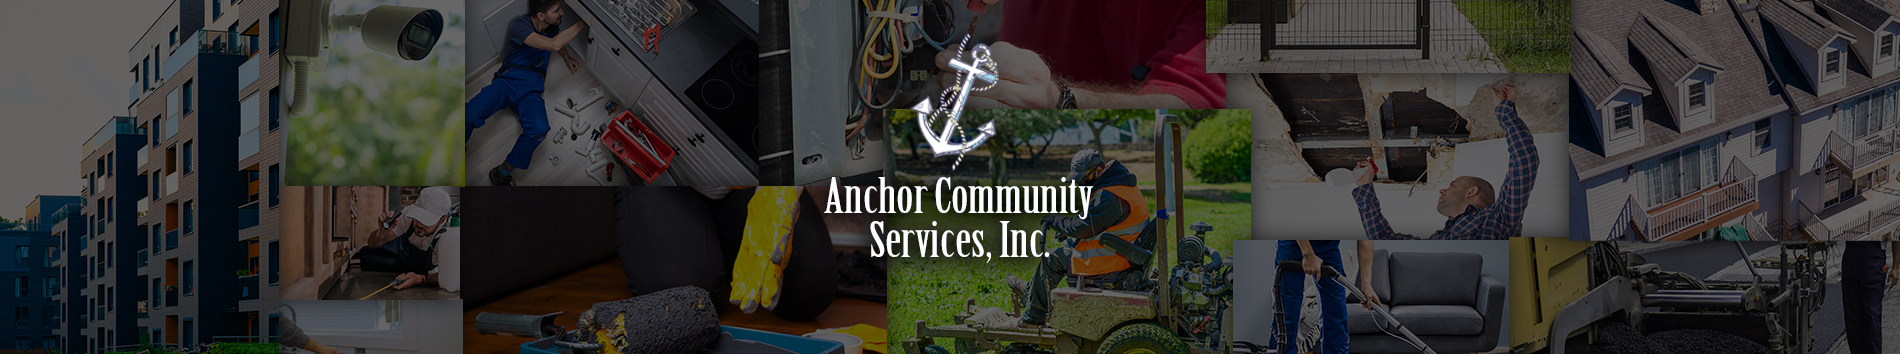 Anchor Community Services, Inc.